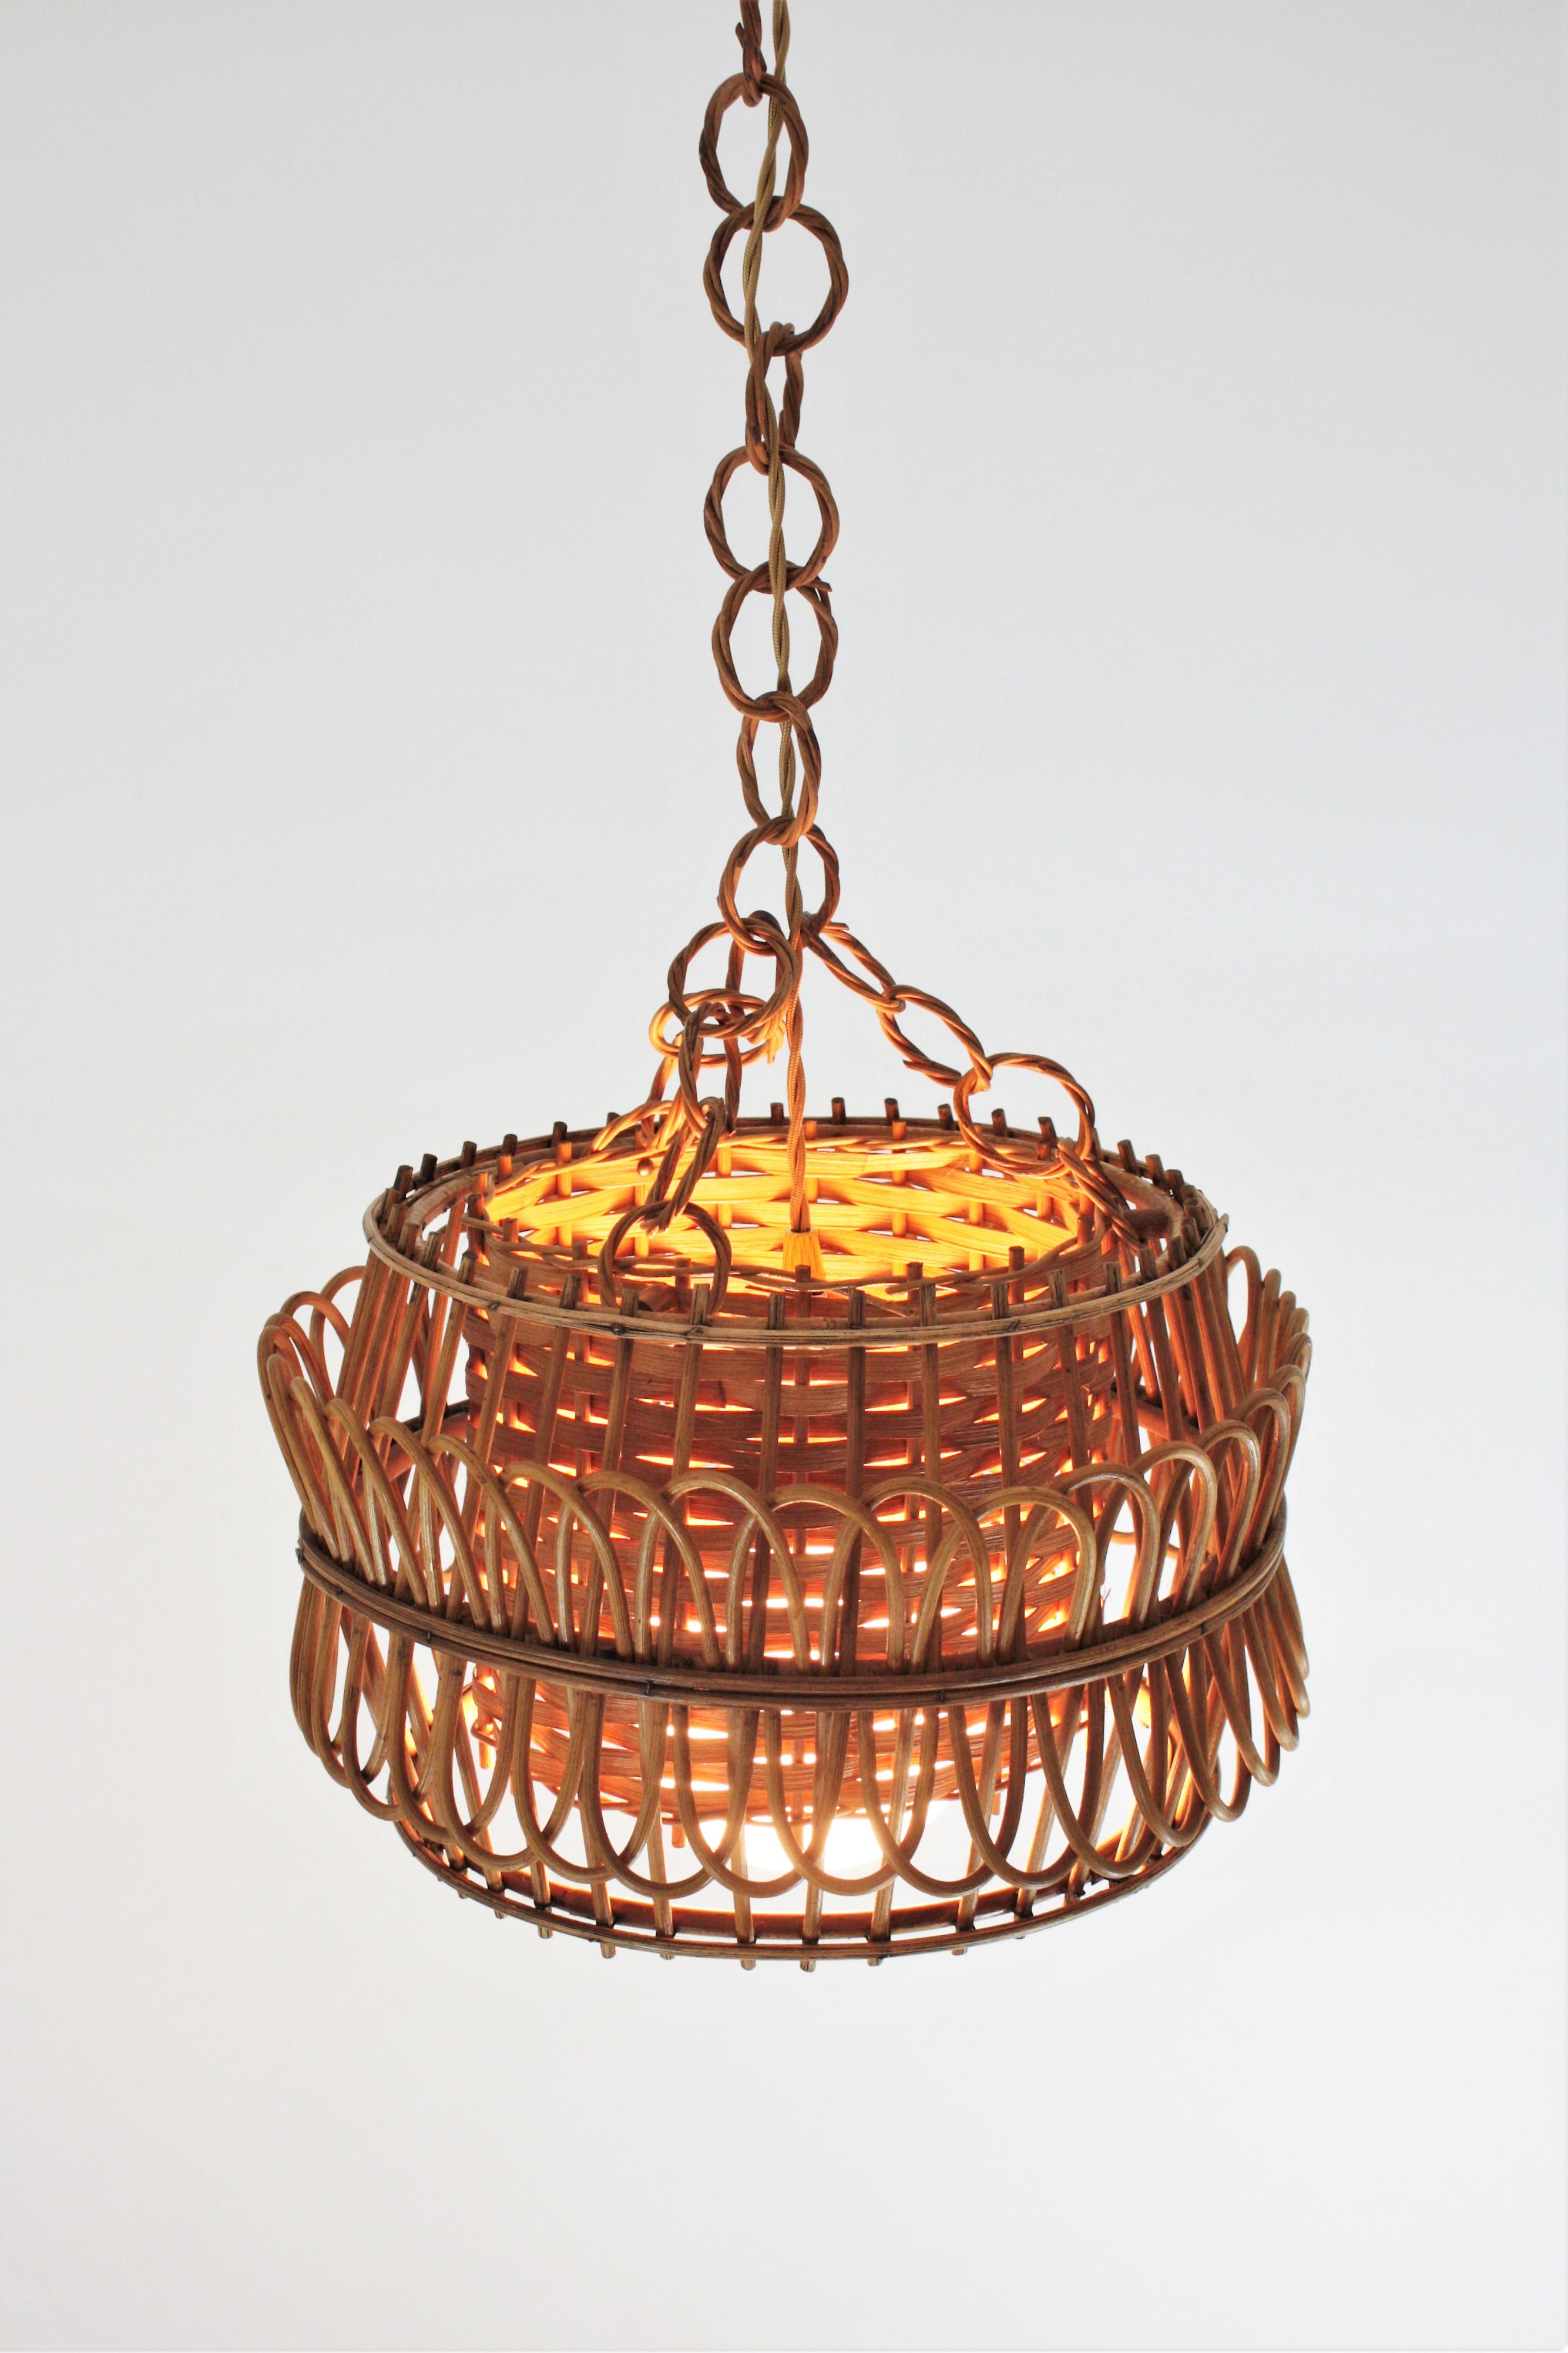 Spanish Modernist Rattan Pendant Lamp / Hanging Light with Woven Wicker Shade 7